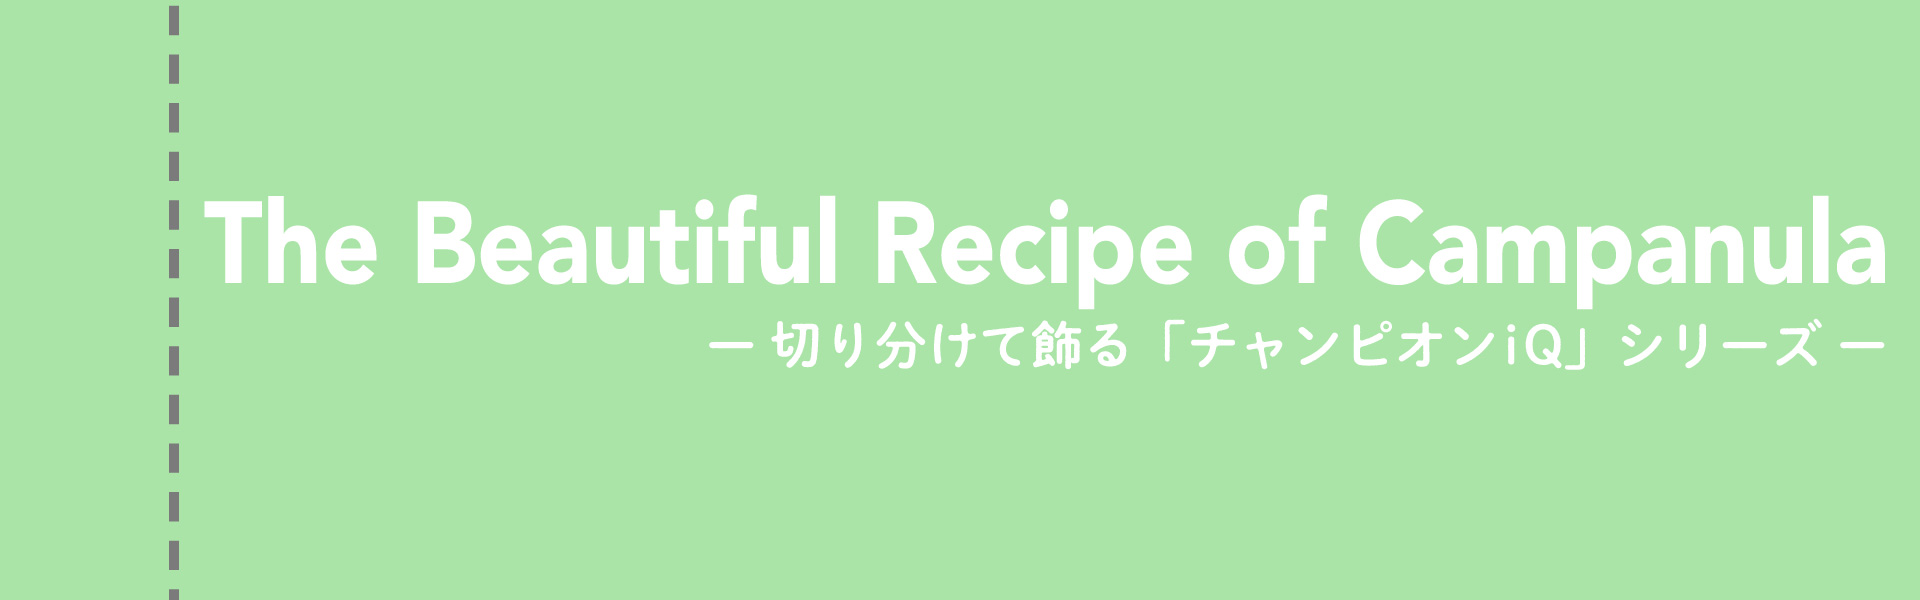 The Beautiful Recipe of Campanula -切り分けて飾るカンパニュラ「チャンピオン」シリーズ-